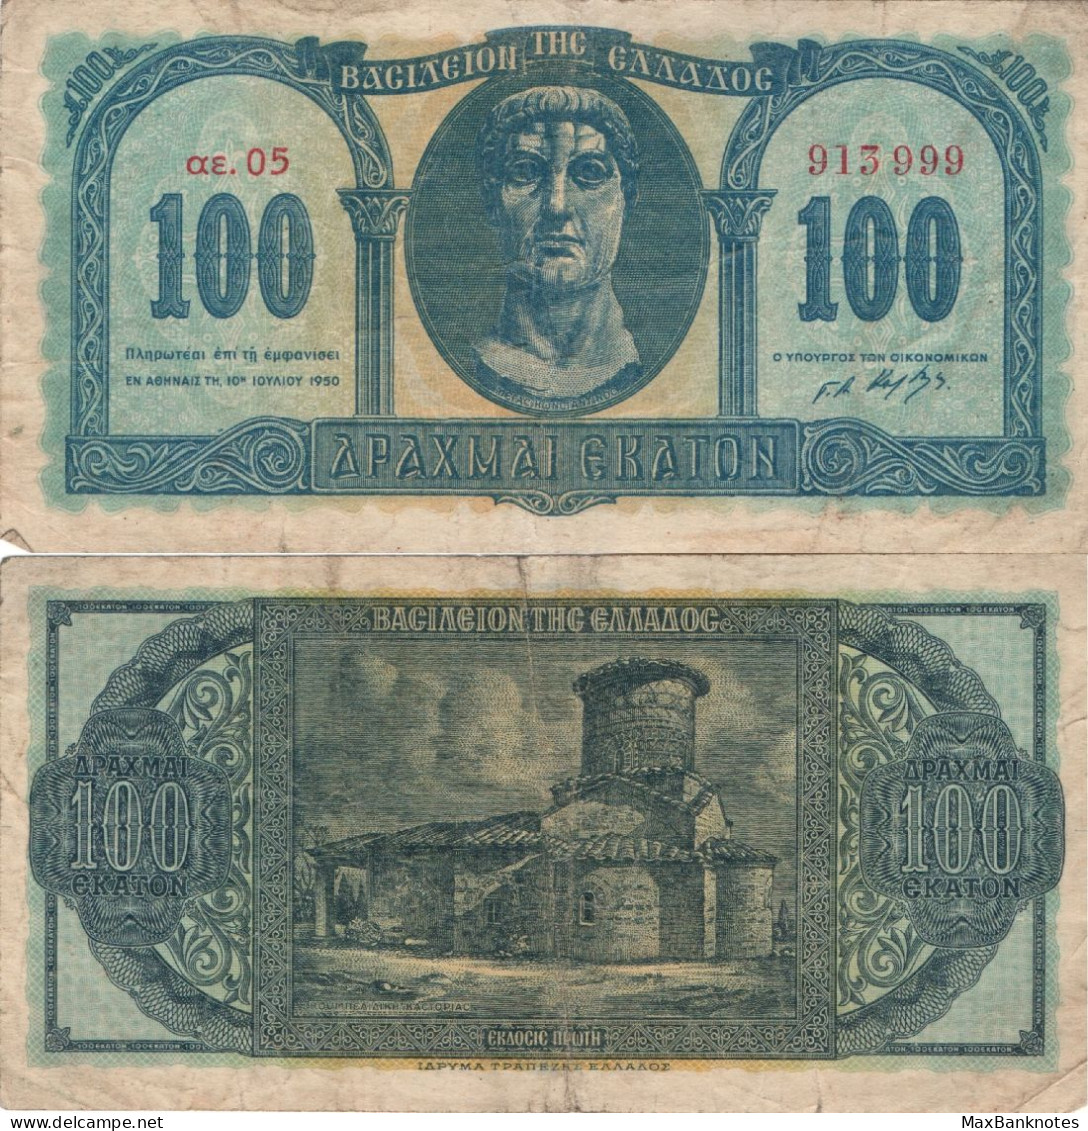 Greece / 100 Drachmai / 1950 / P-324(a) / VF - Grèce